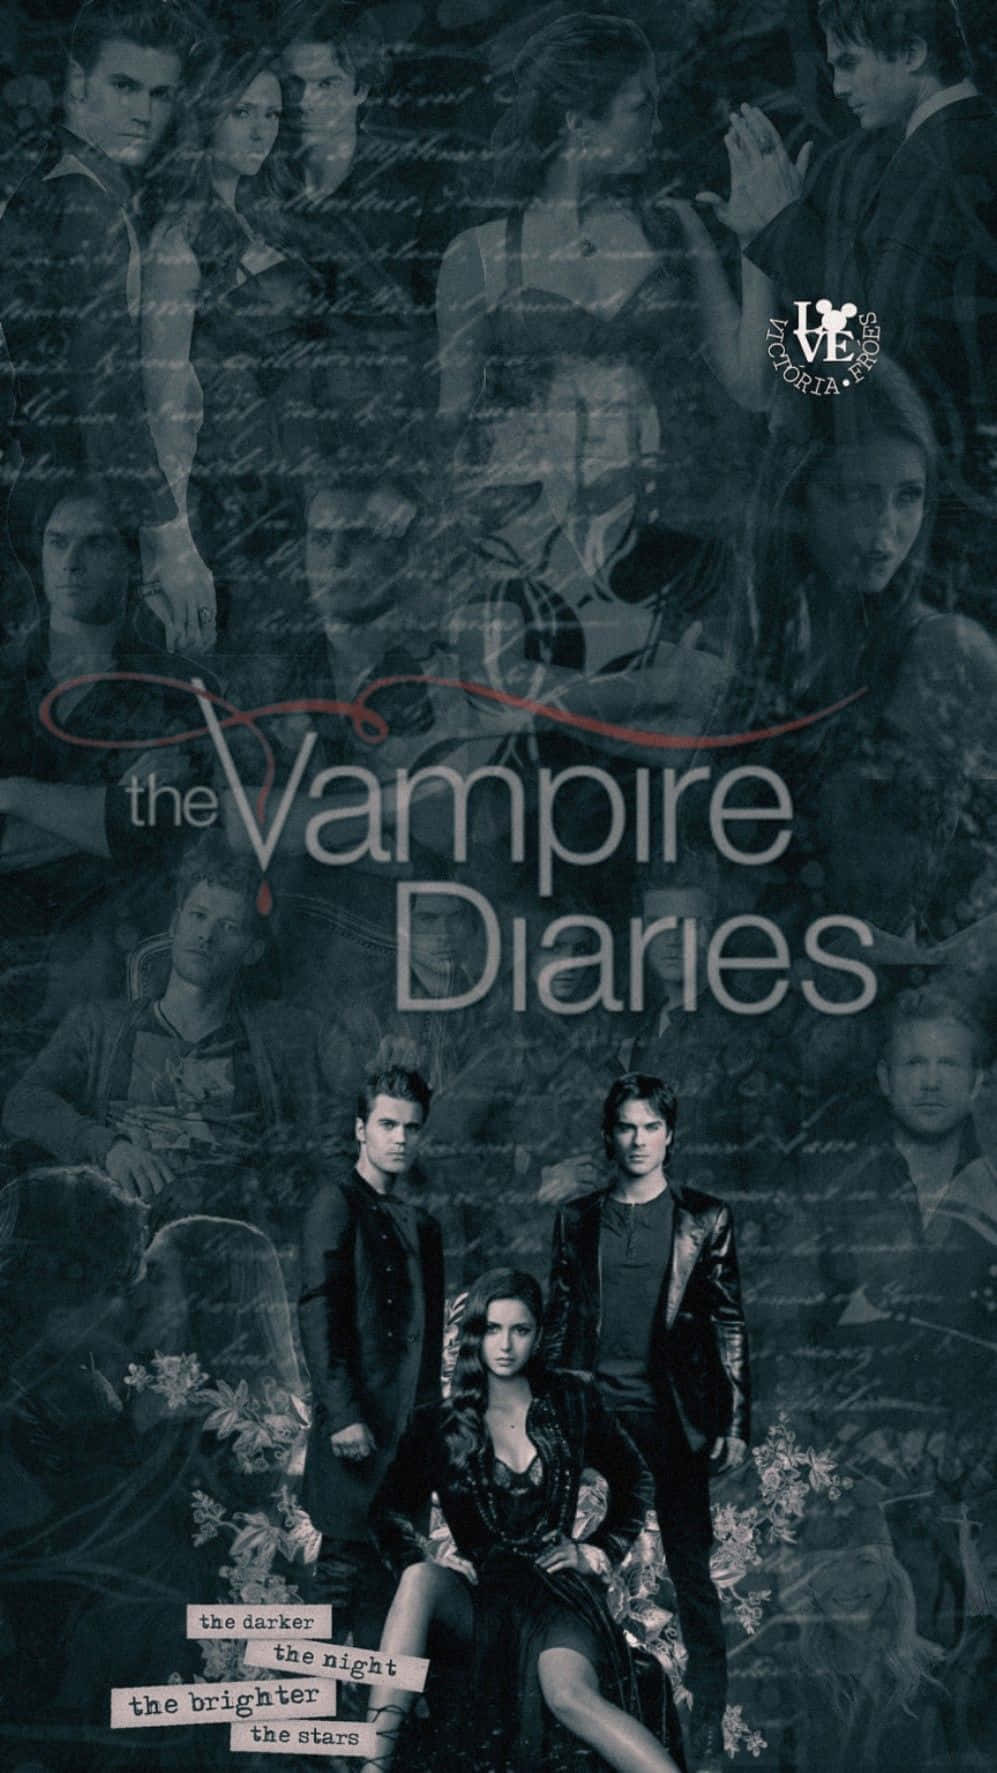 Free The Vampire Diaries iPhone Wallpaper Downloads, The Vampire Diaries iPhone Wallpaper for FREE